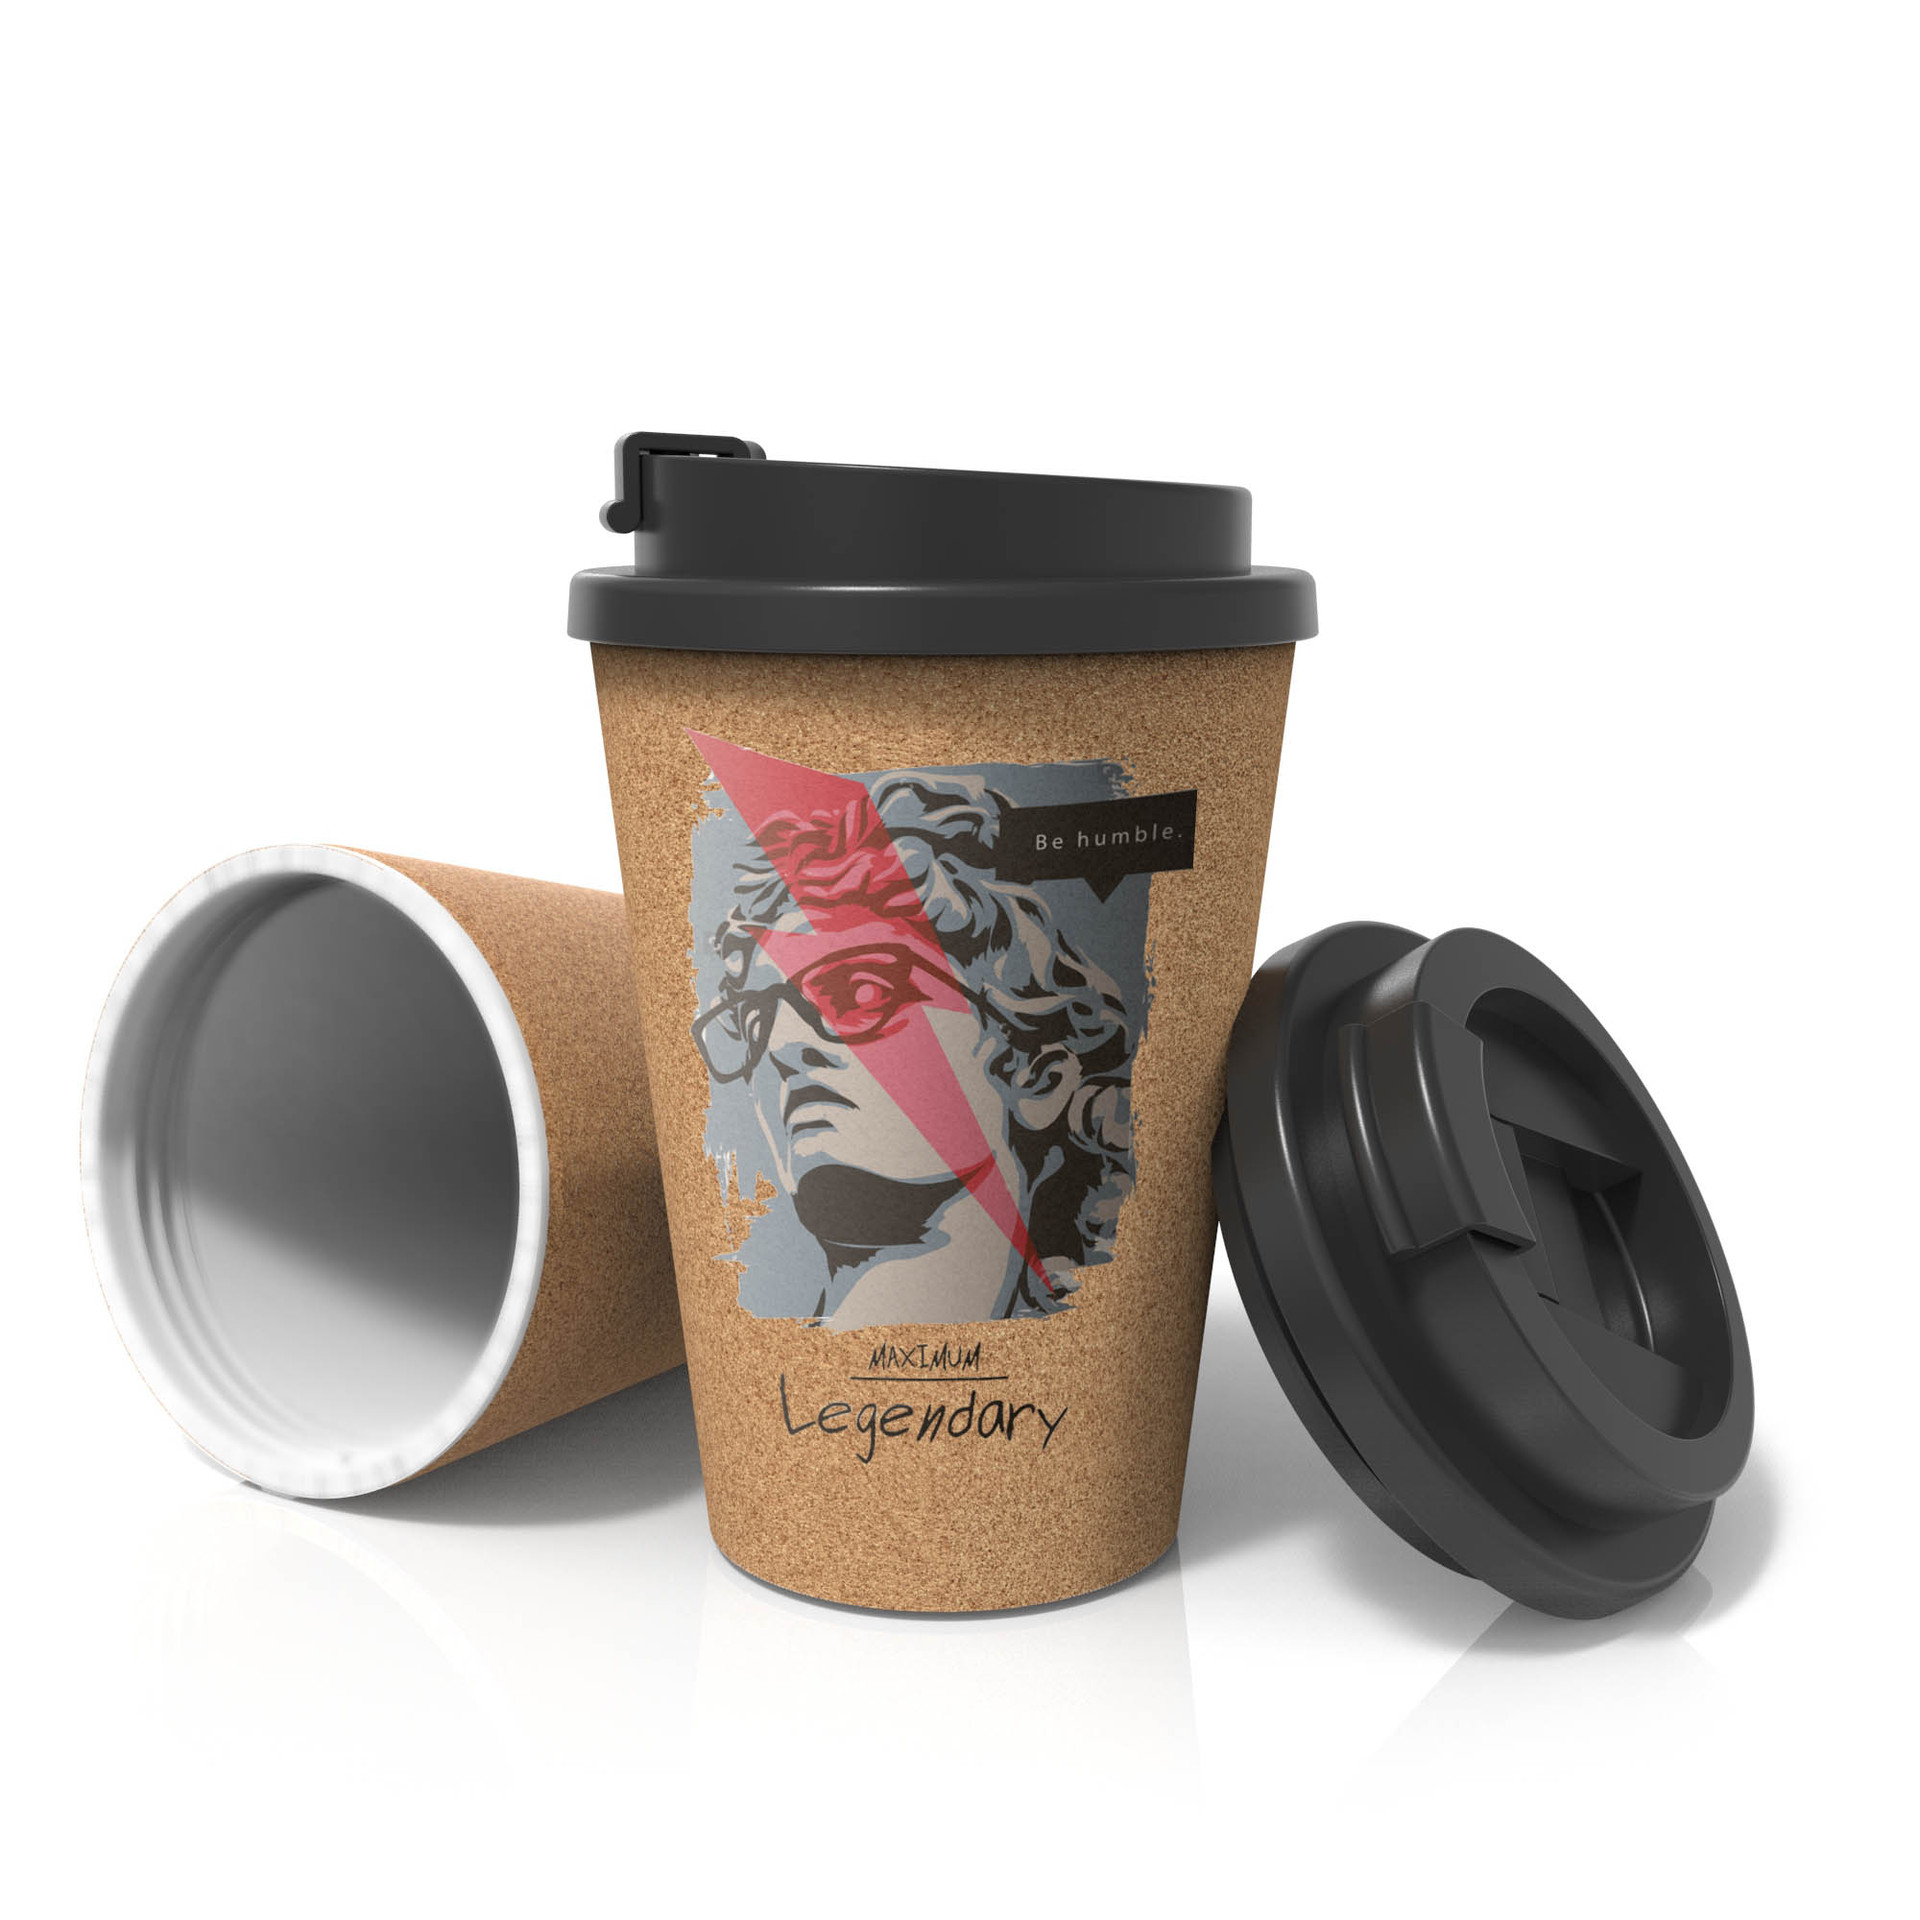 Snap leakproof degradable PLA cork coffee mug customized printing environmentally friendly and non-shattering mug